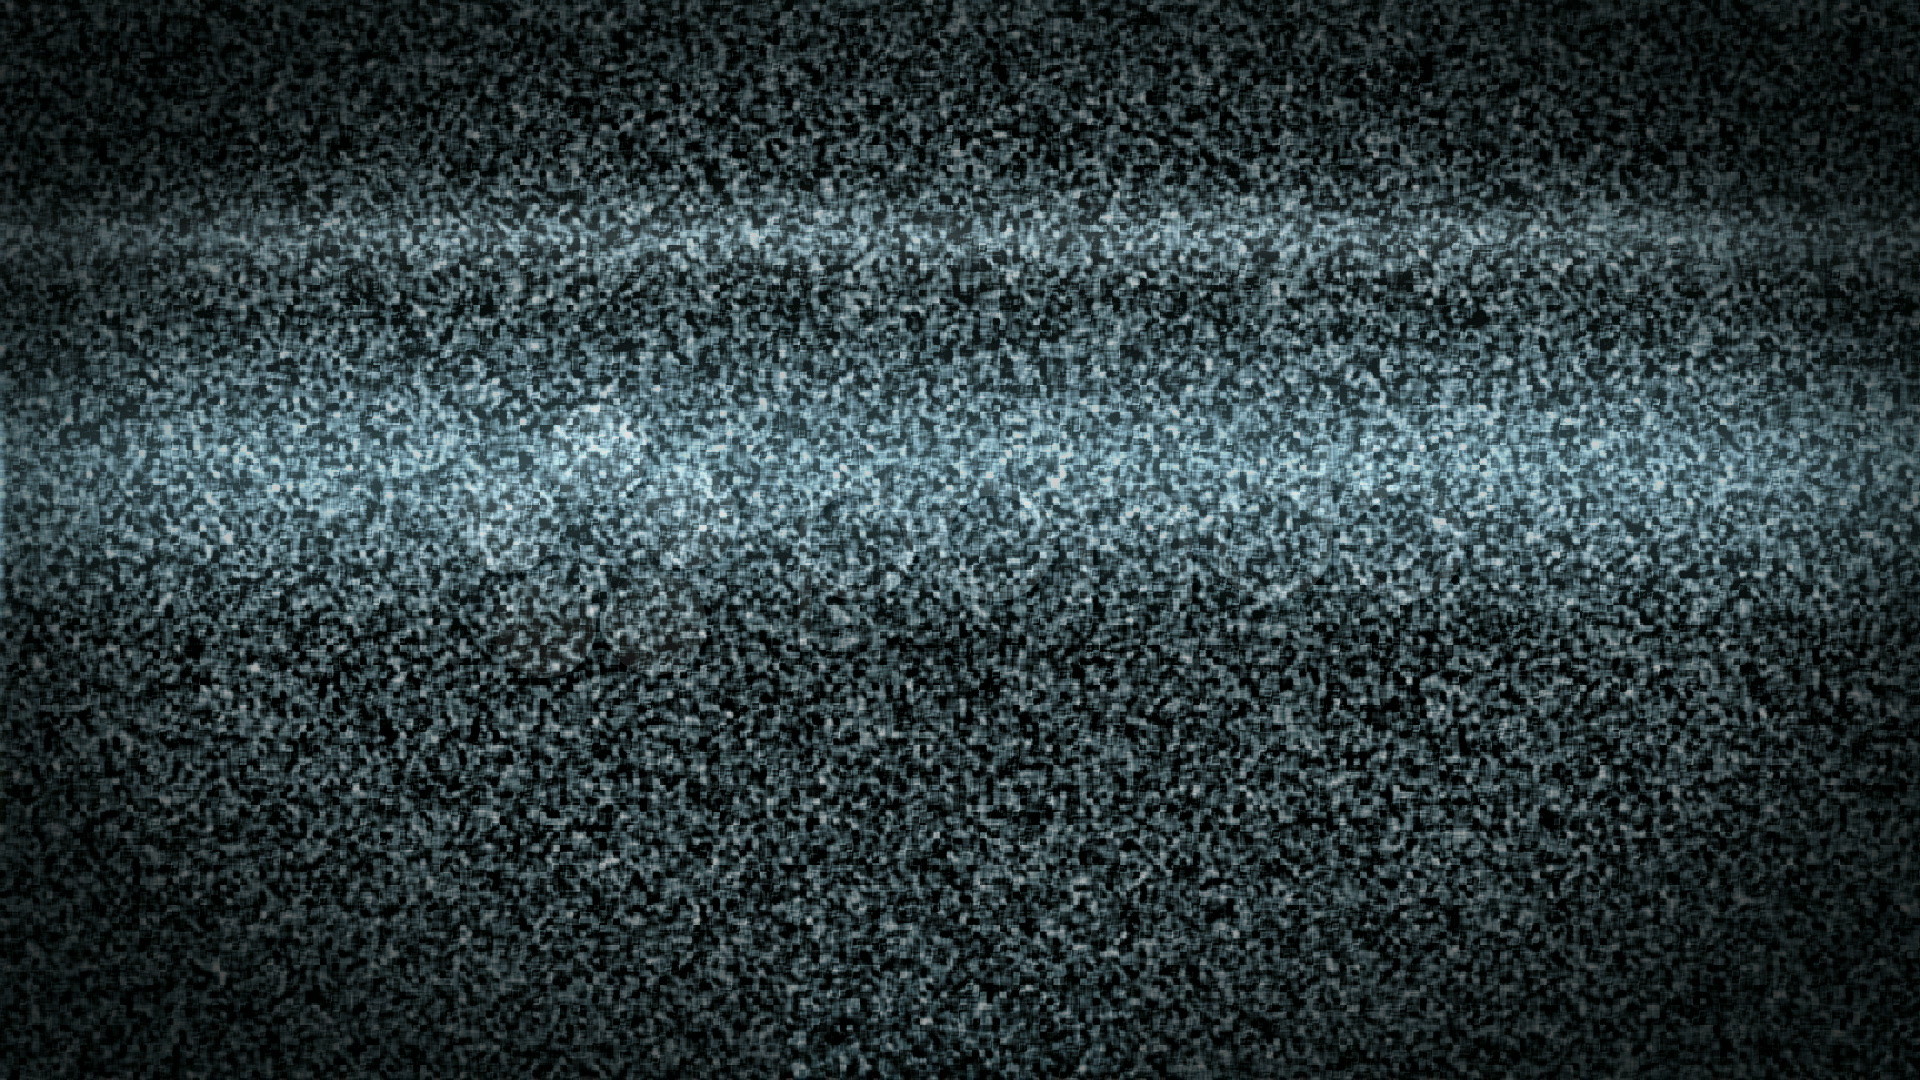 1920x1080 Tv Static Background Hd [static 